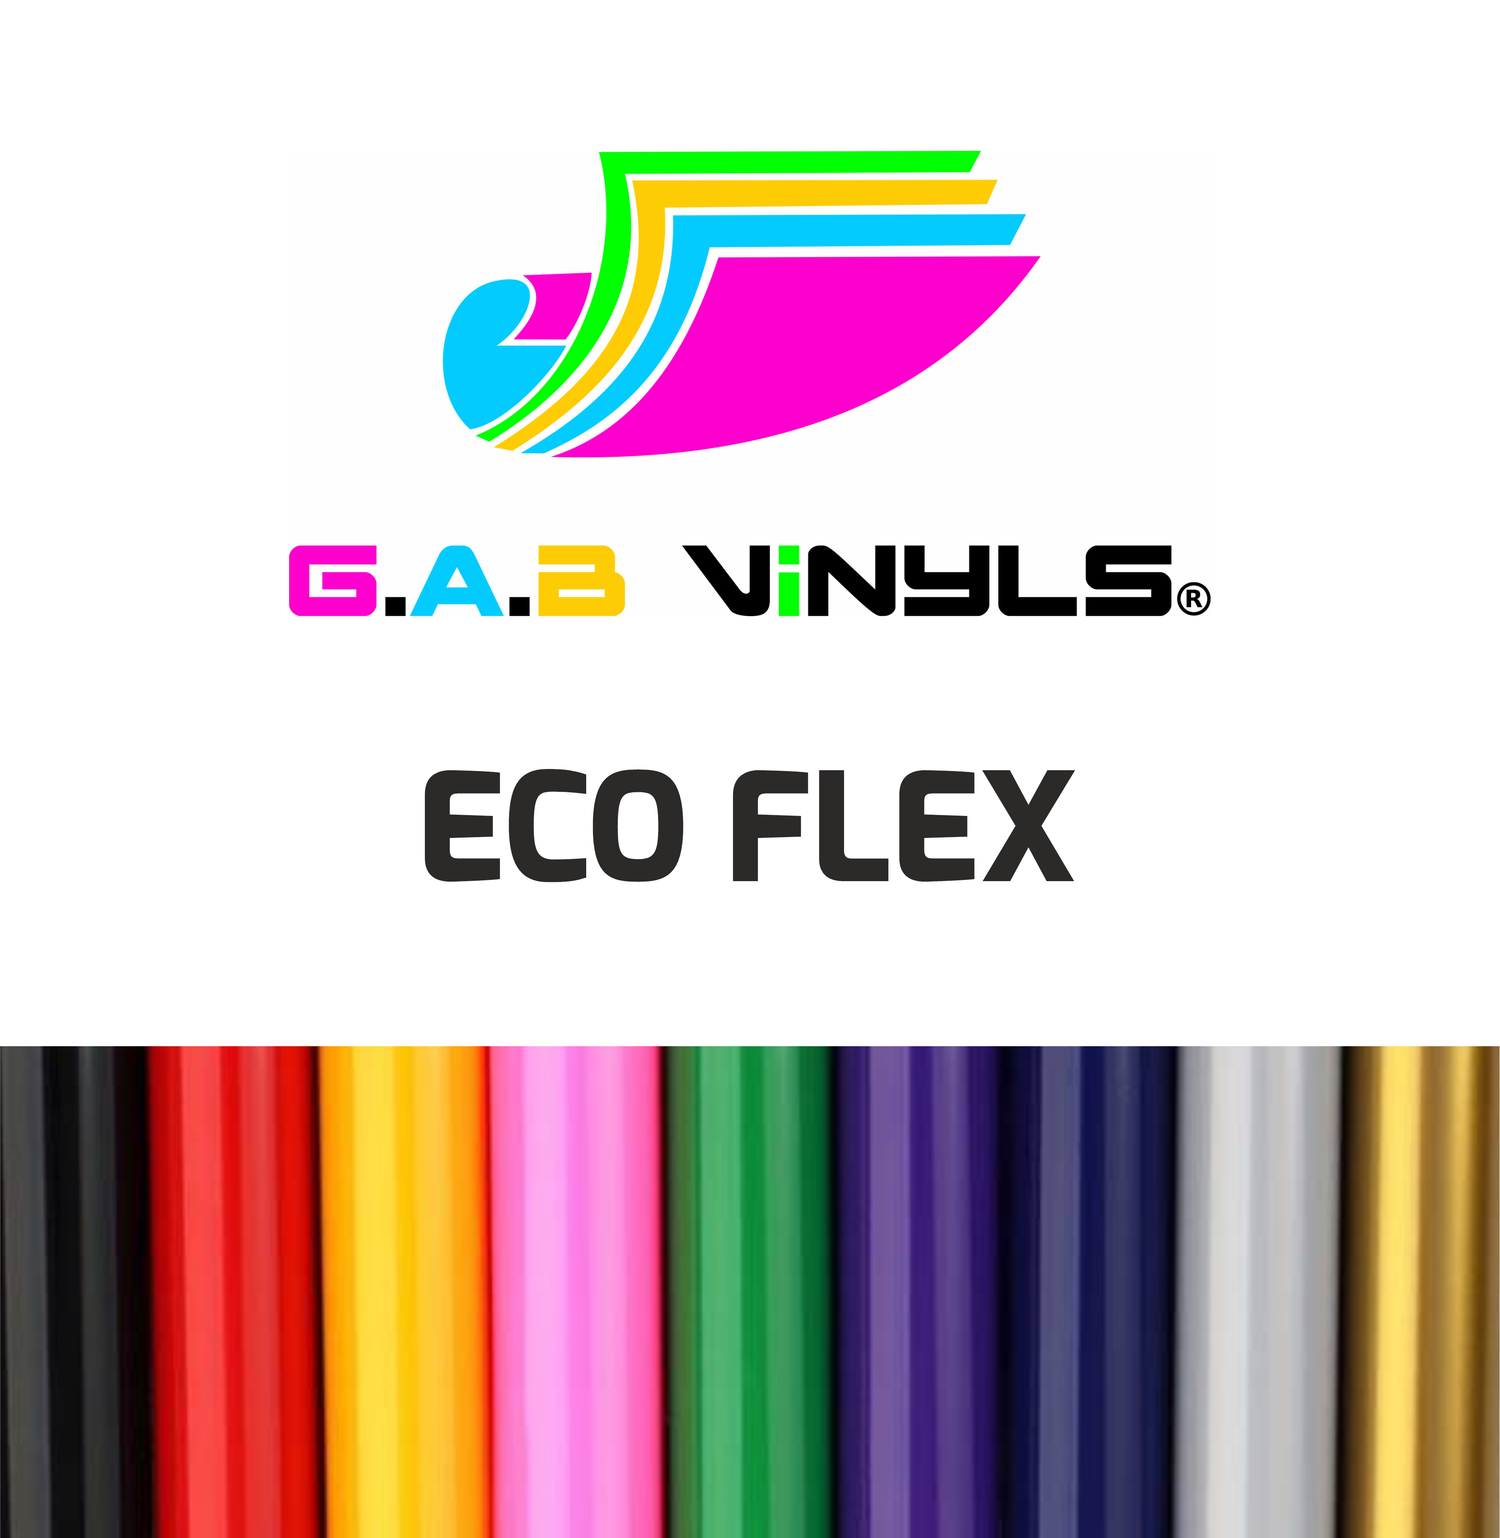 Eco Flex - lower cost alternative